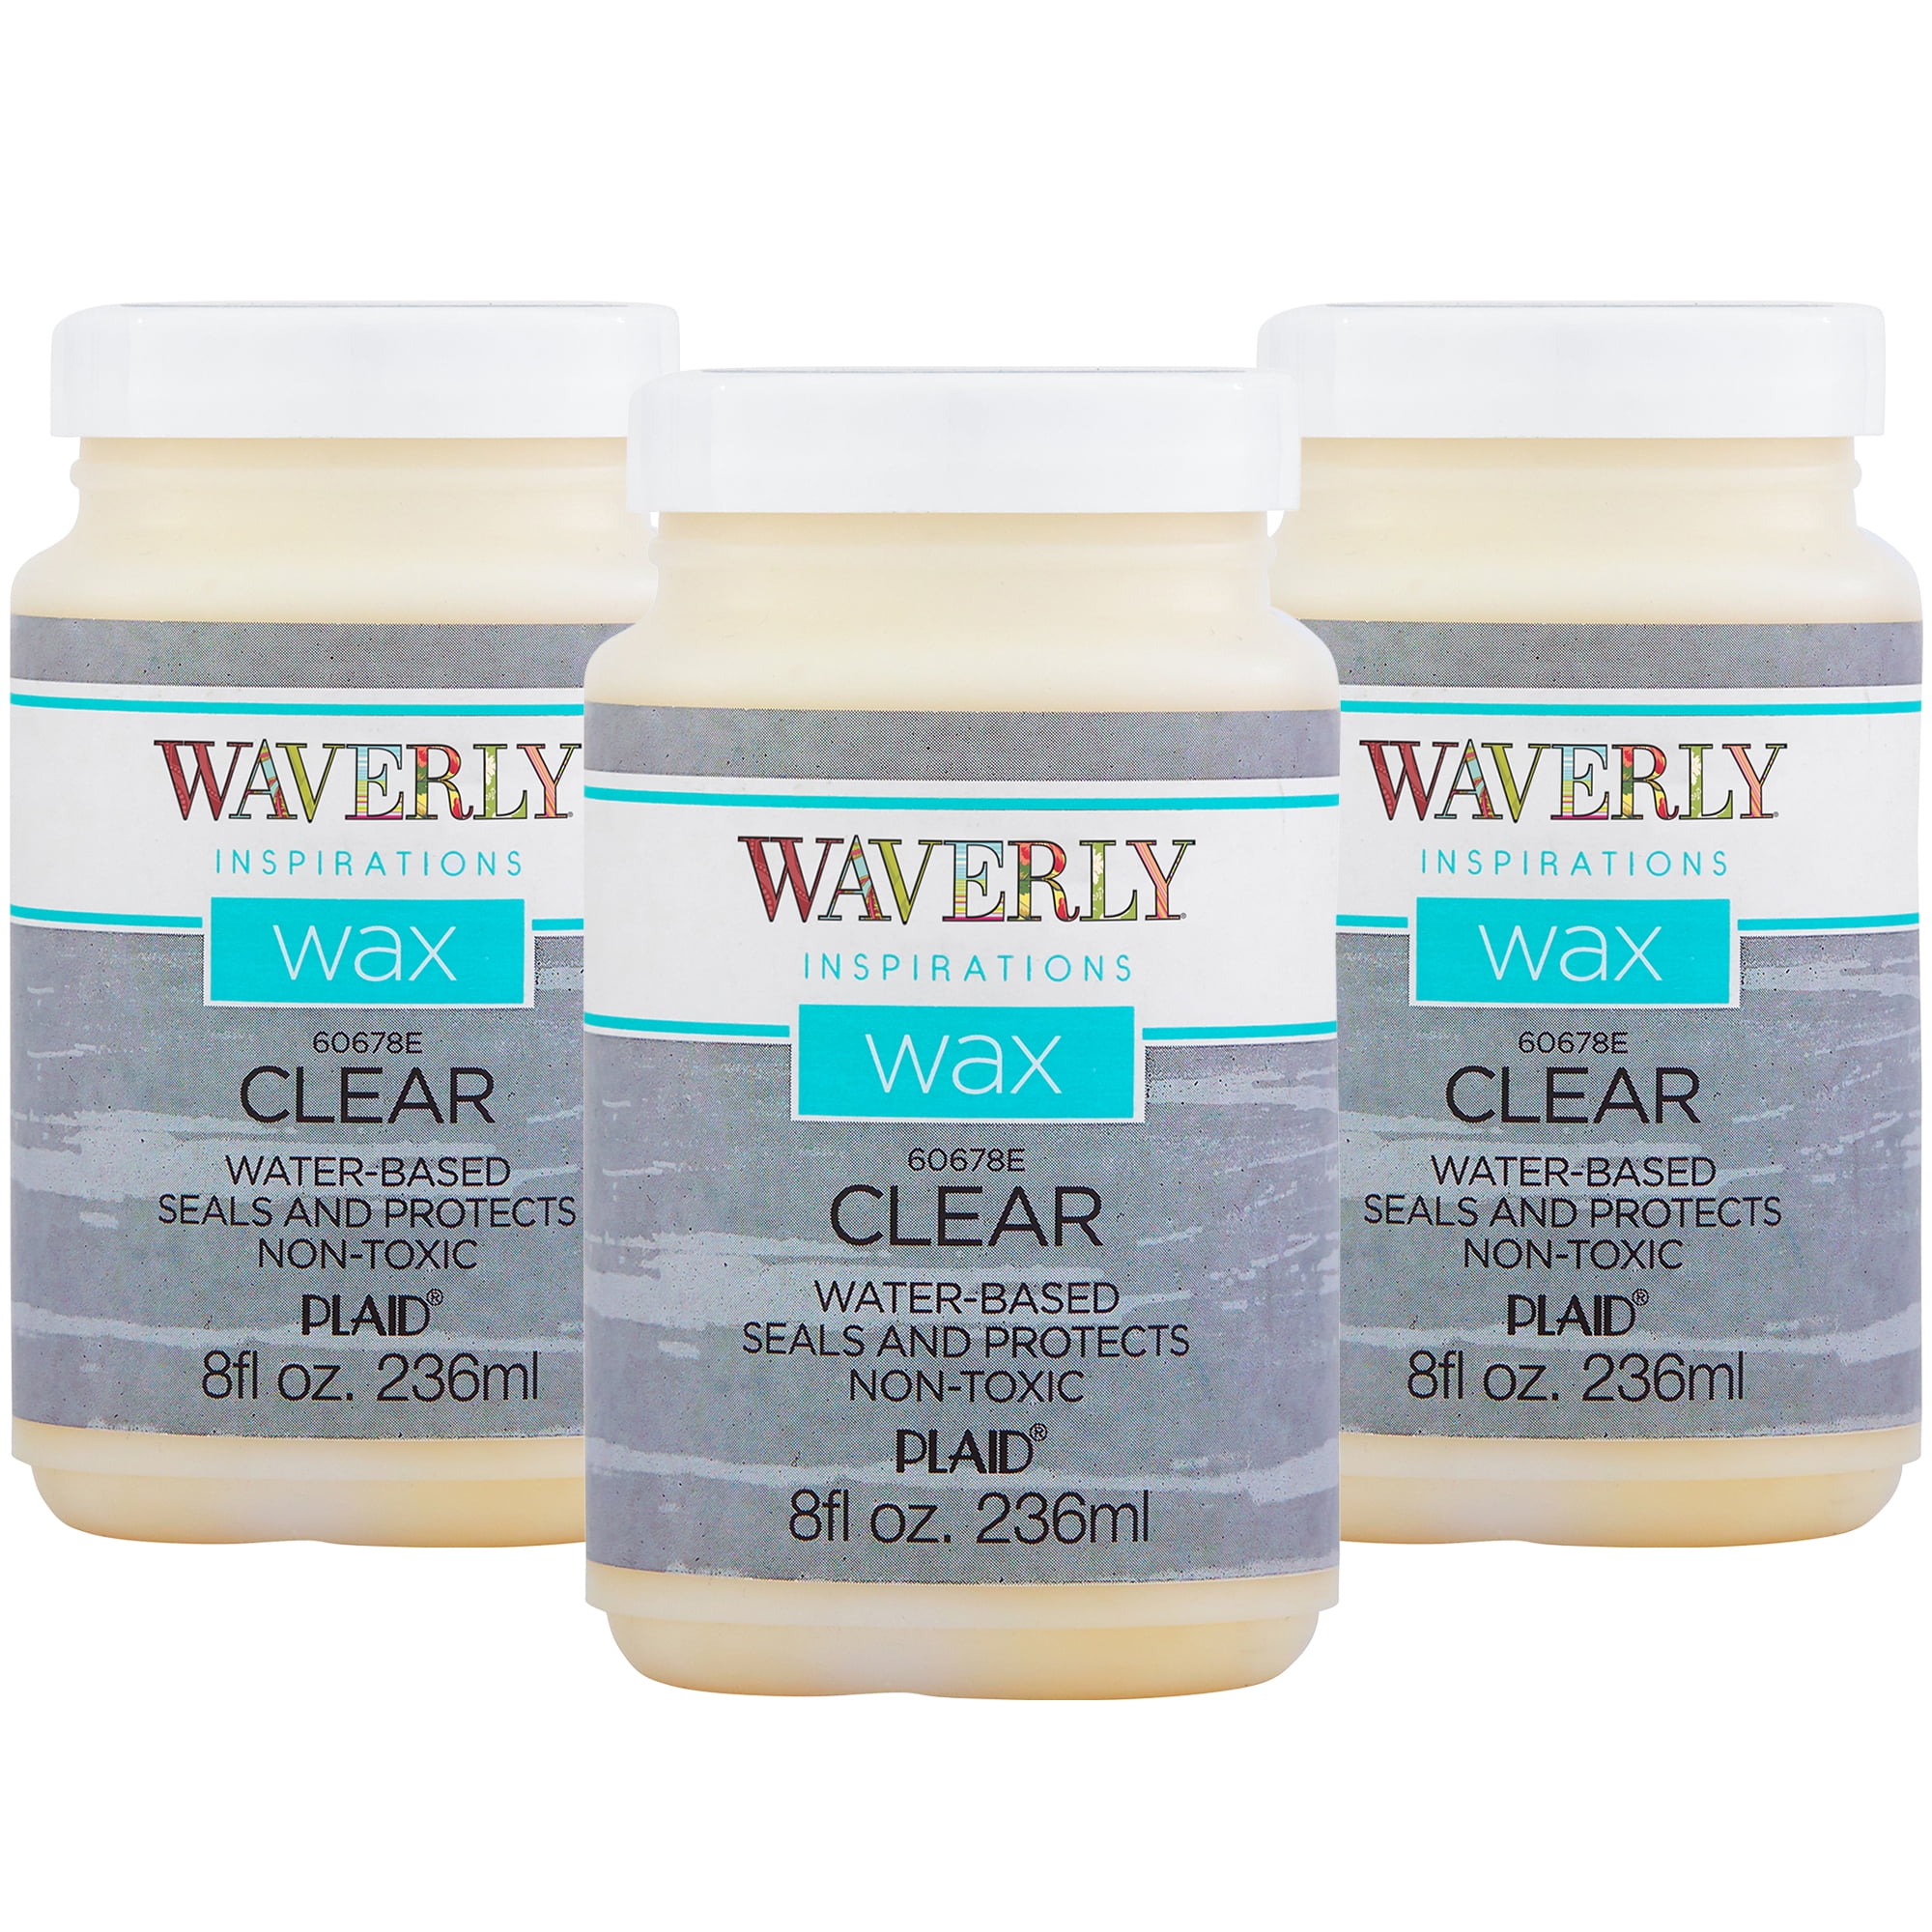 Shop Plaid Waverly ® Inspirations Wax - Antique, 2 oz. - 60734E